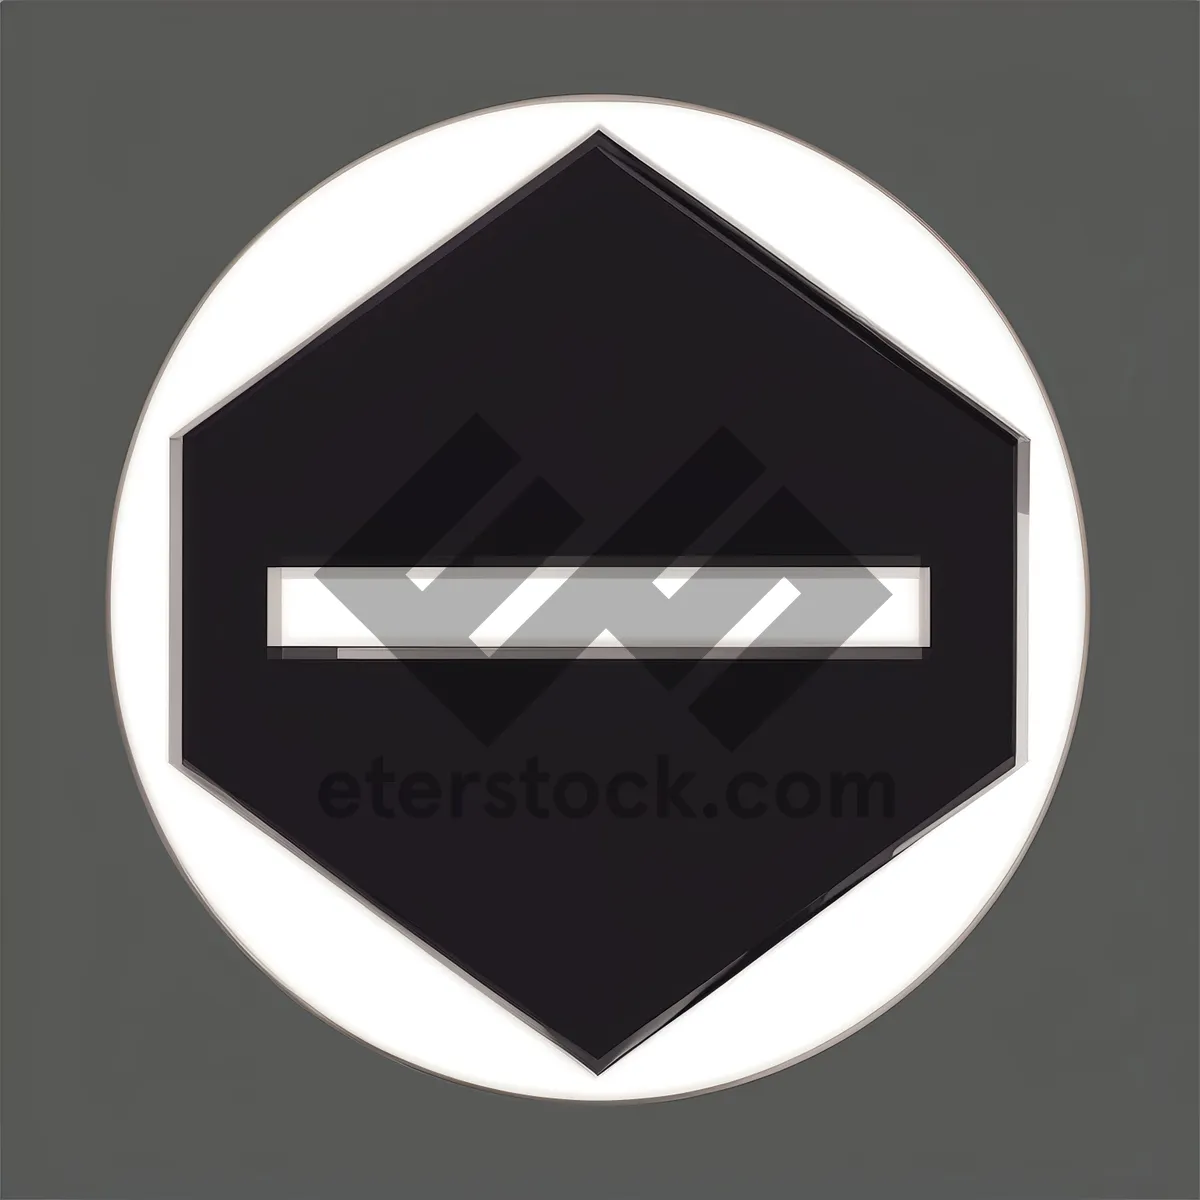 Picture of Shiny black heraldic shield emblem design